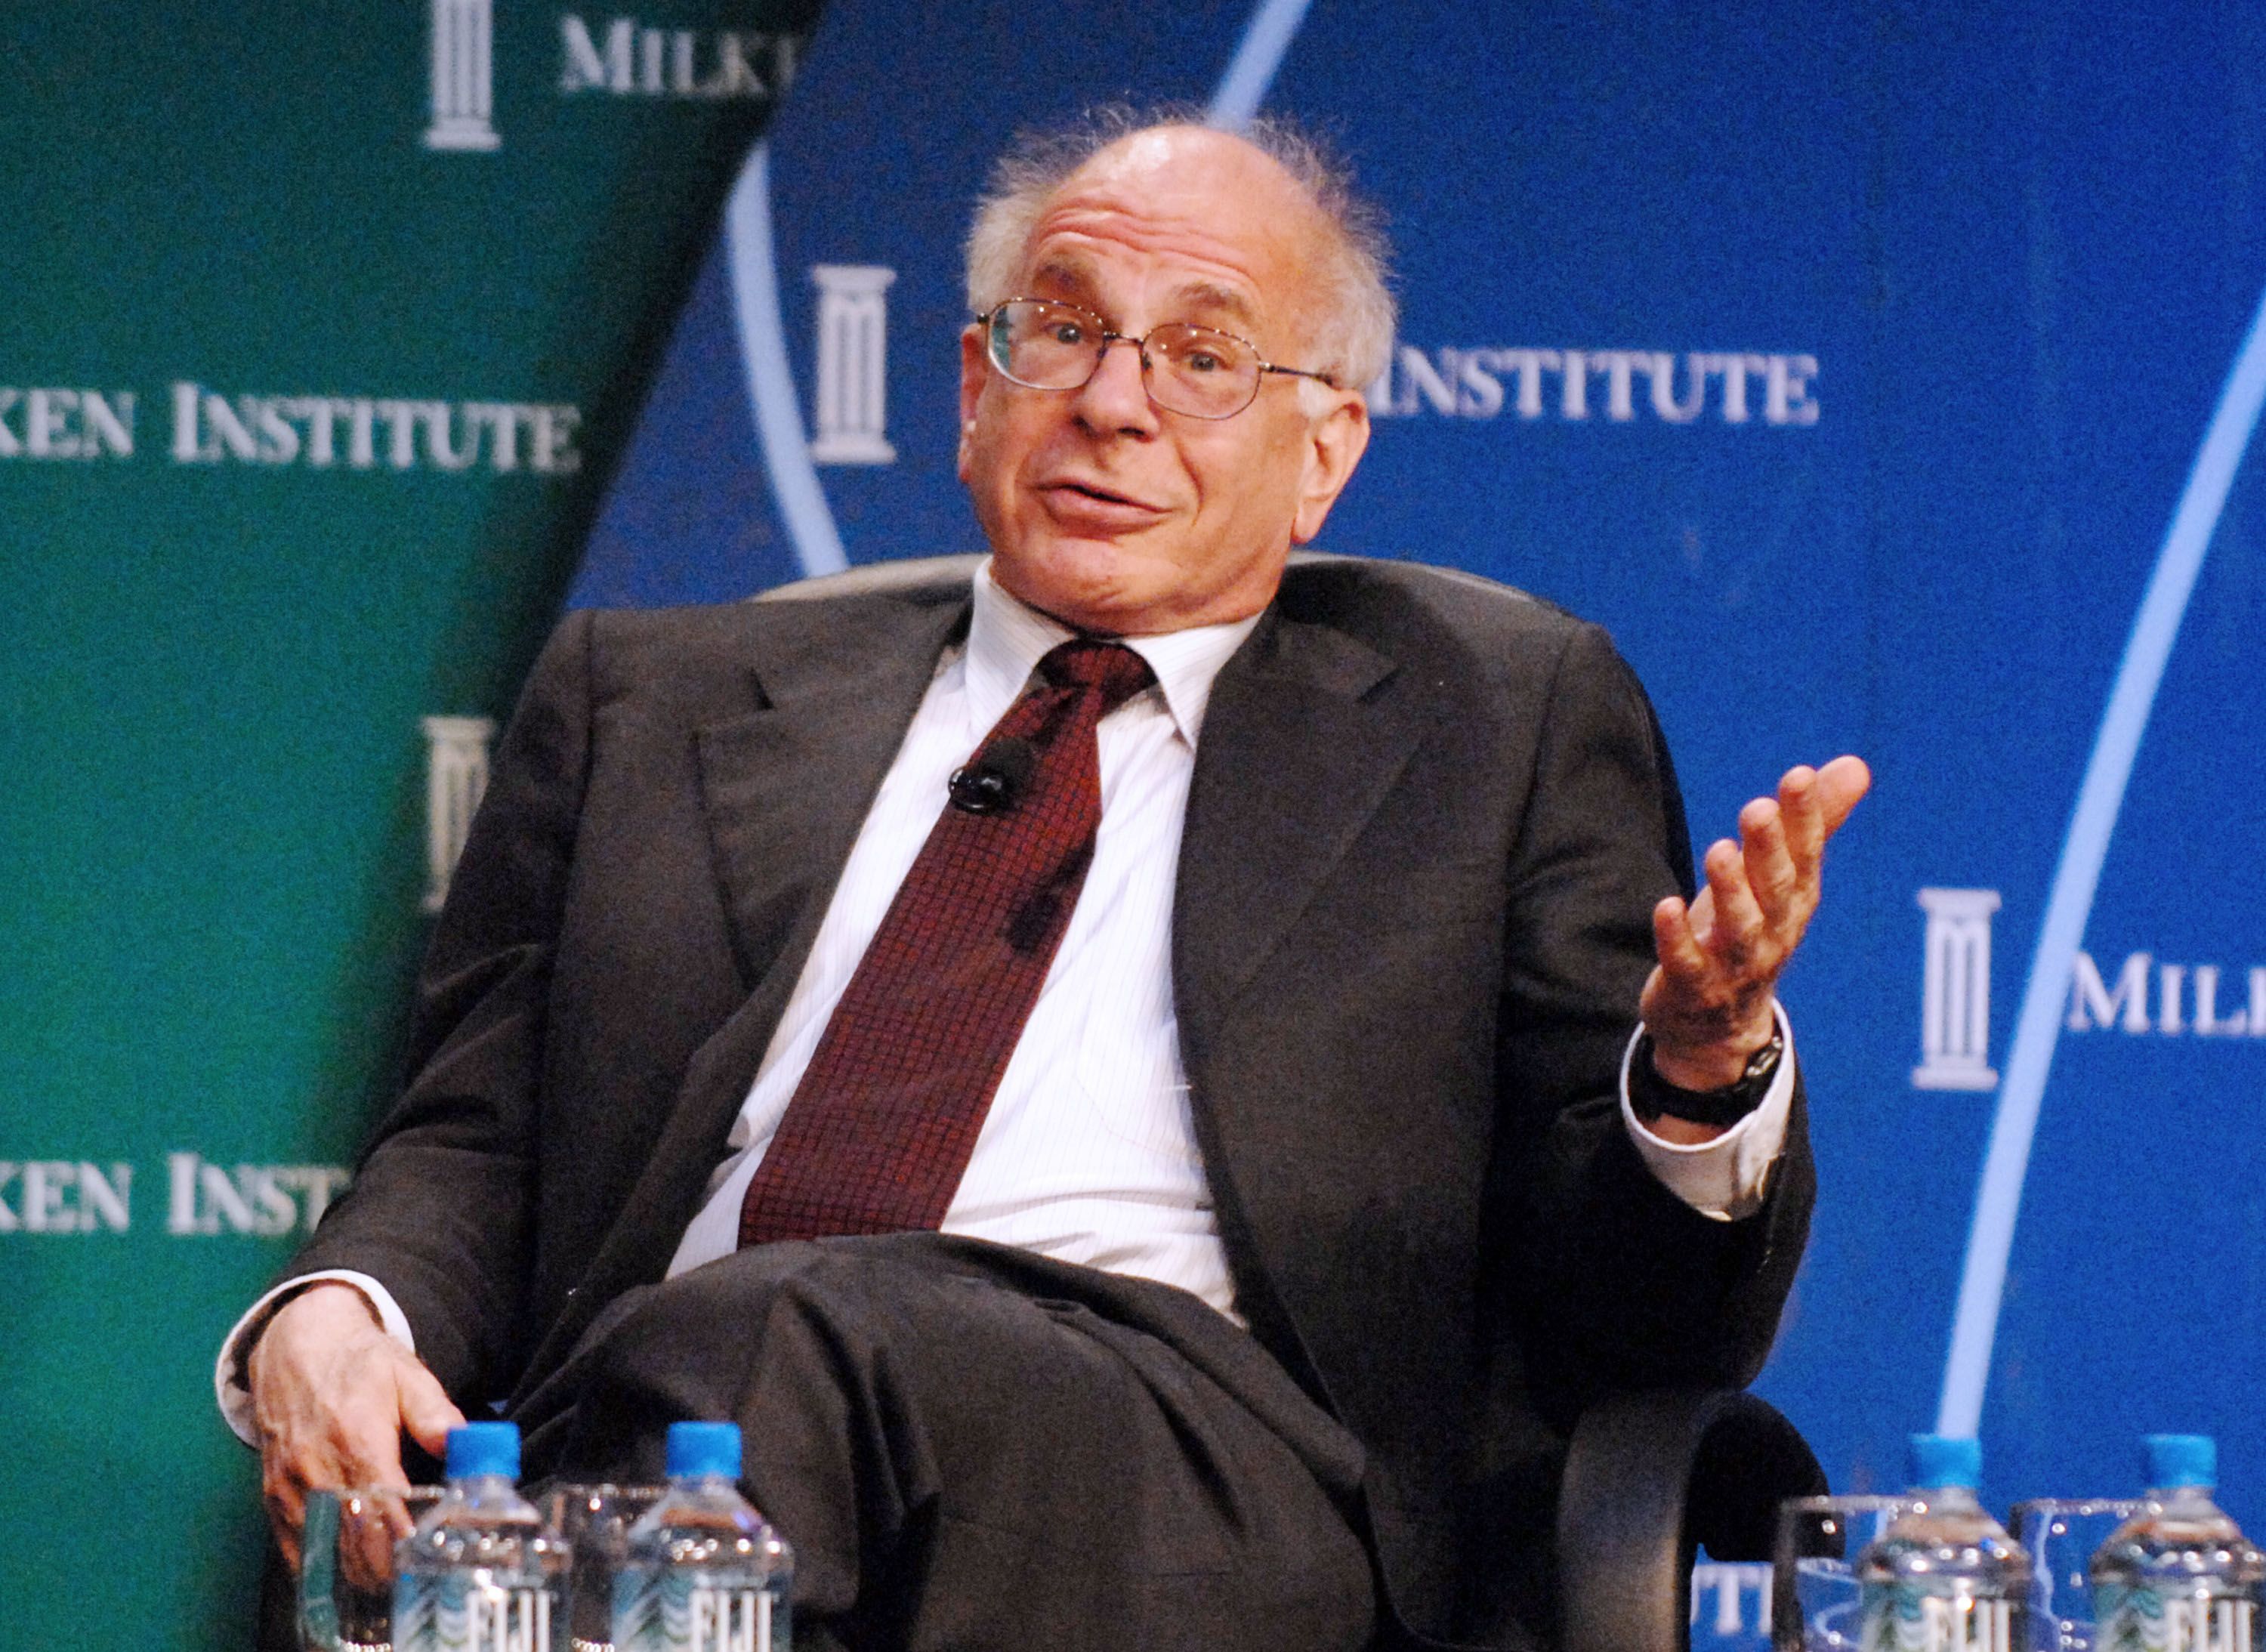 Daniel Kahneman (Economist and Psychologist) - On This Day